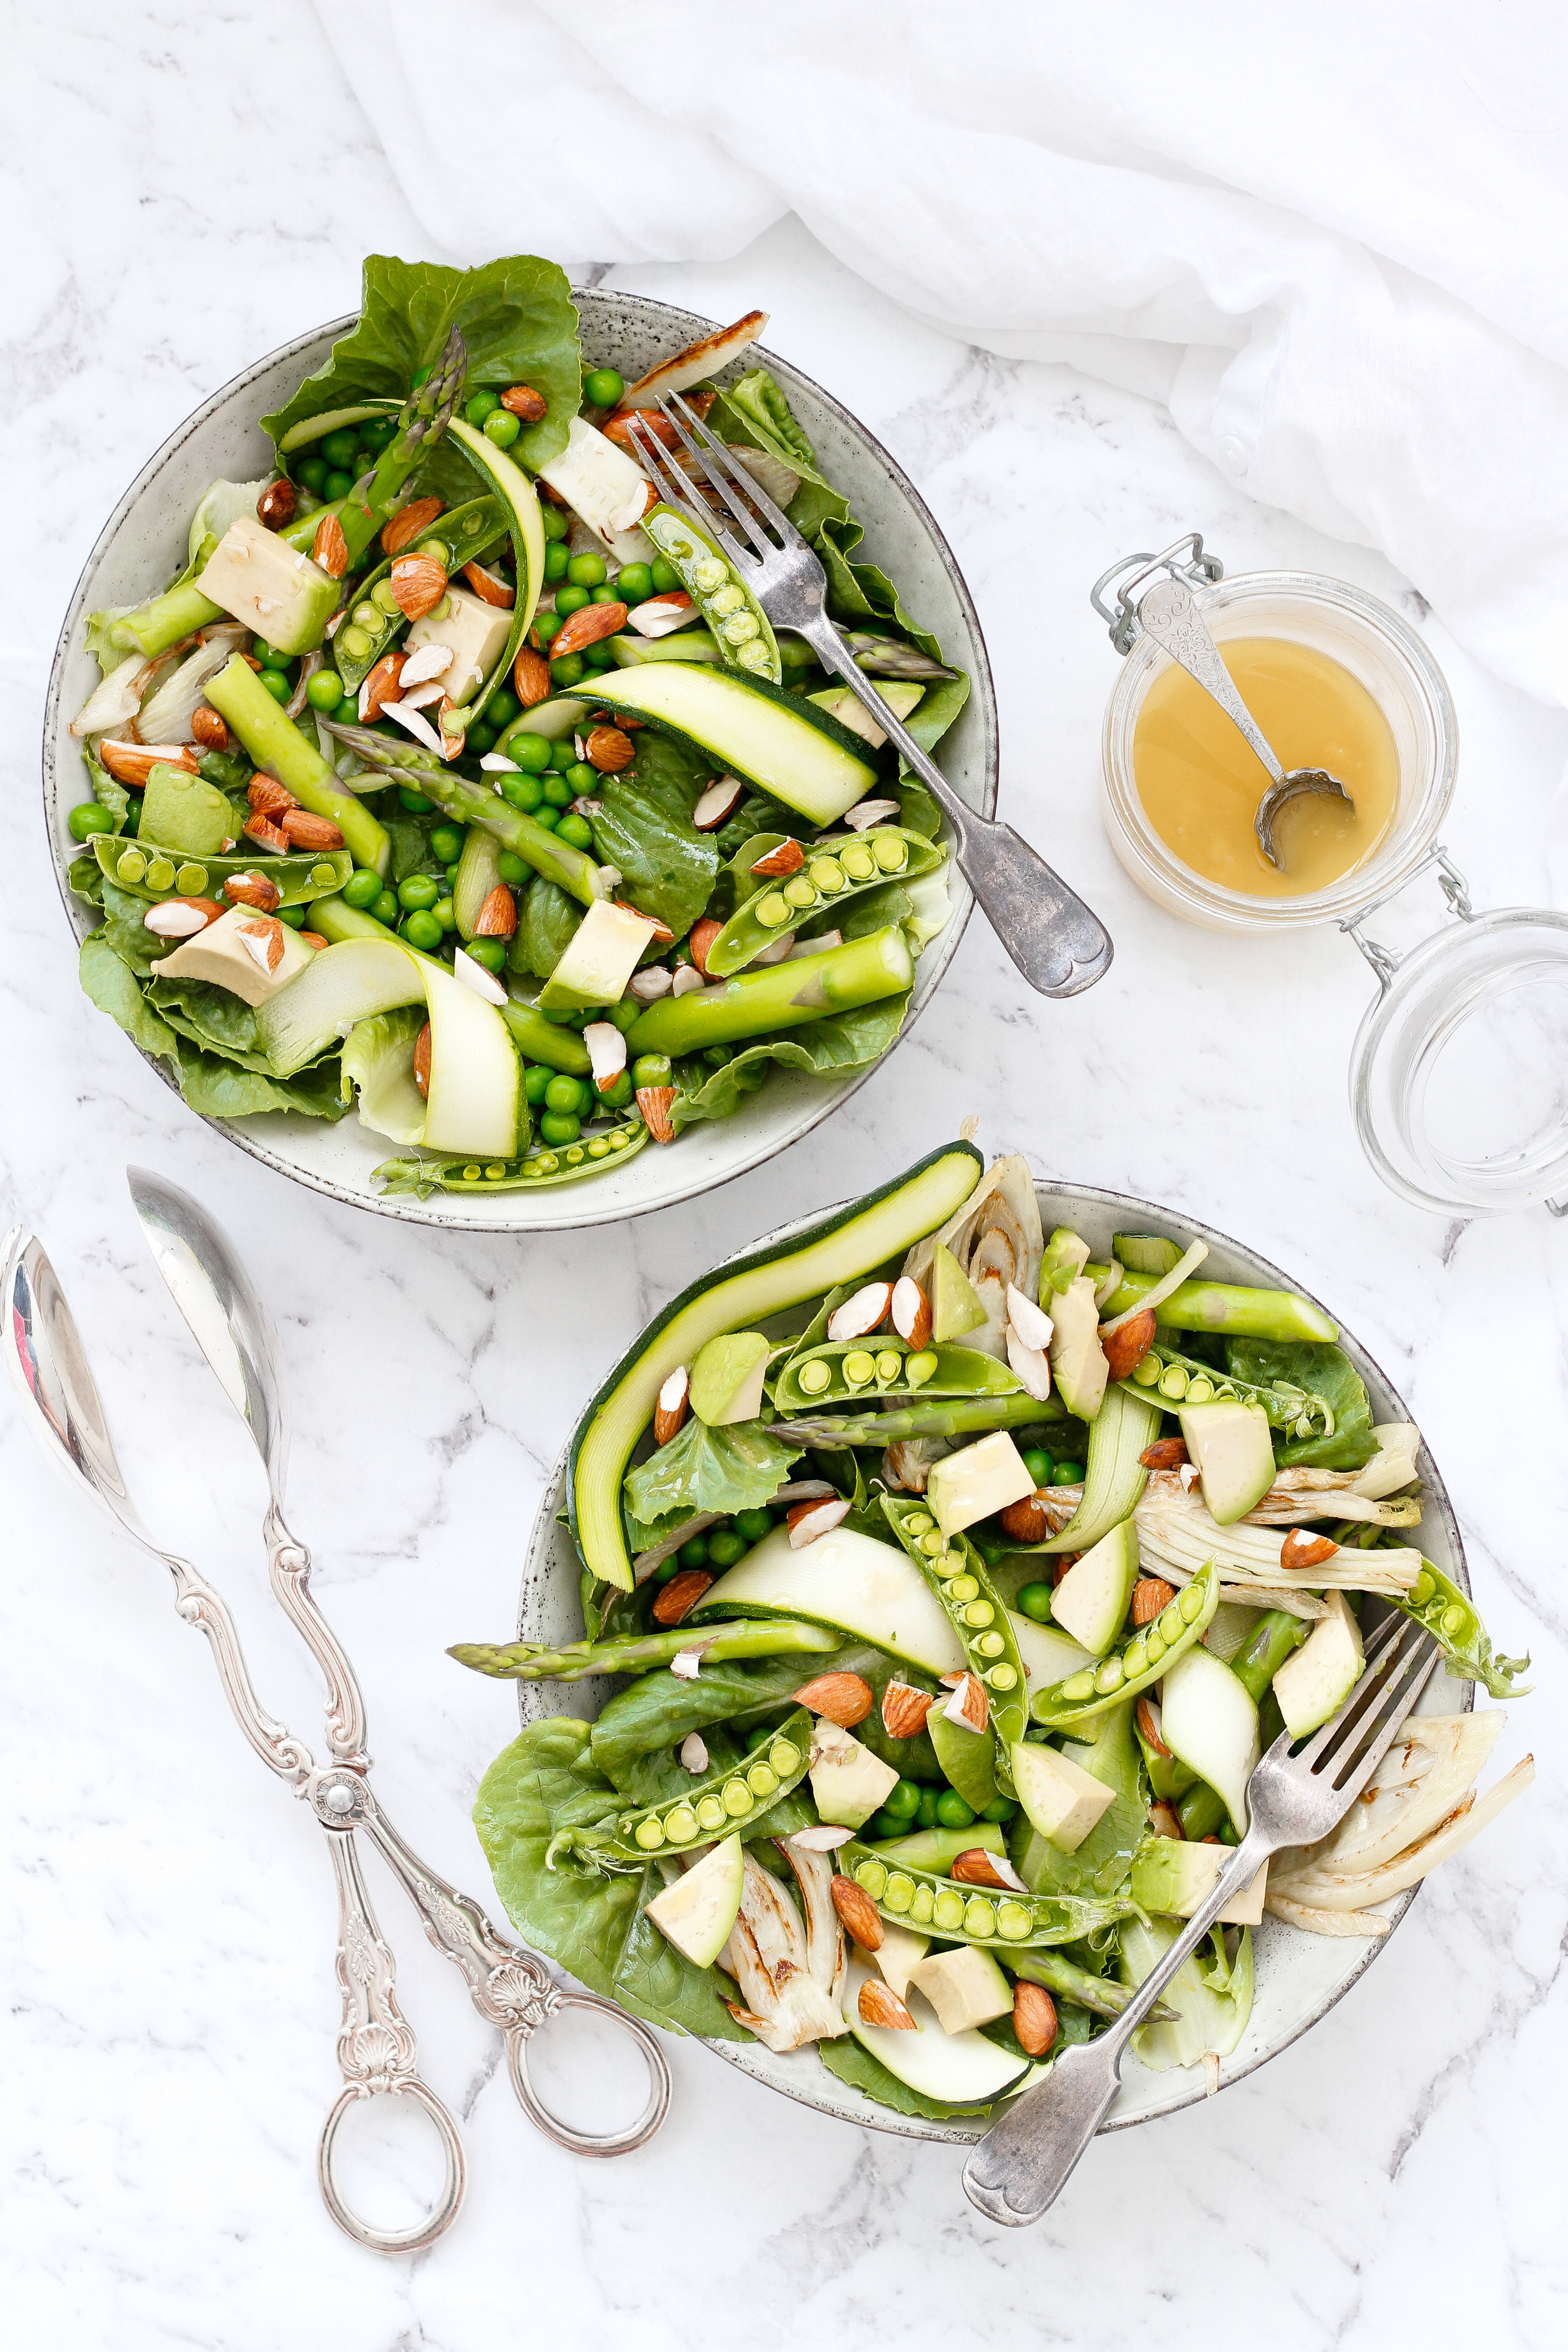 Fresh, bright and green salad